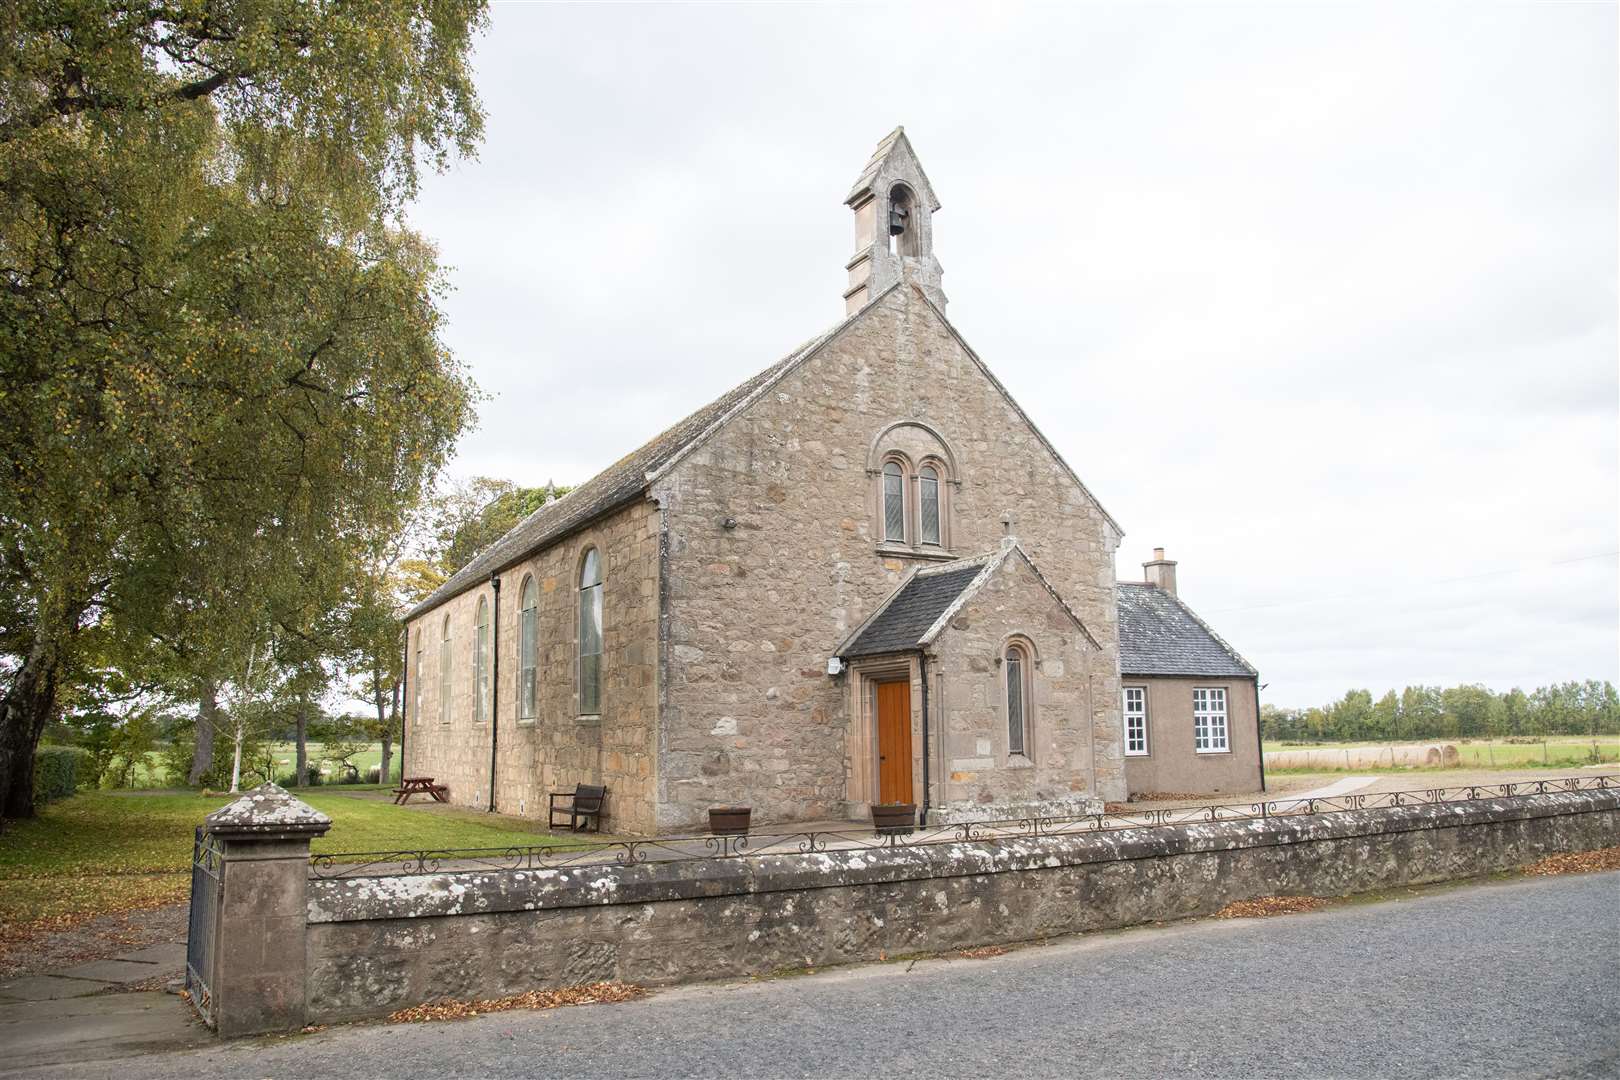 St Andrew's Lhanbryd & Urquhart Parish Church...Picture: Daniel Forsyth..